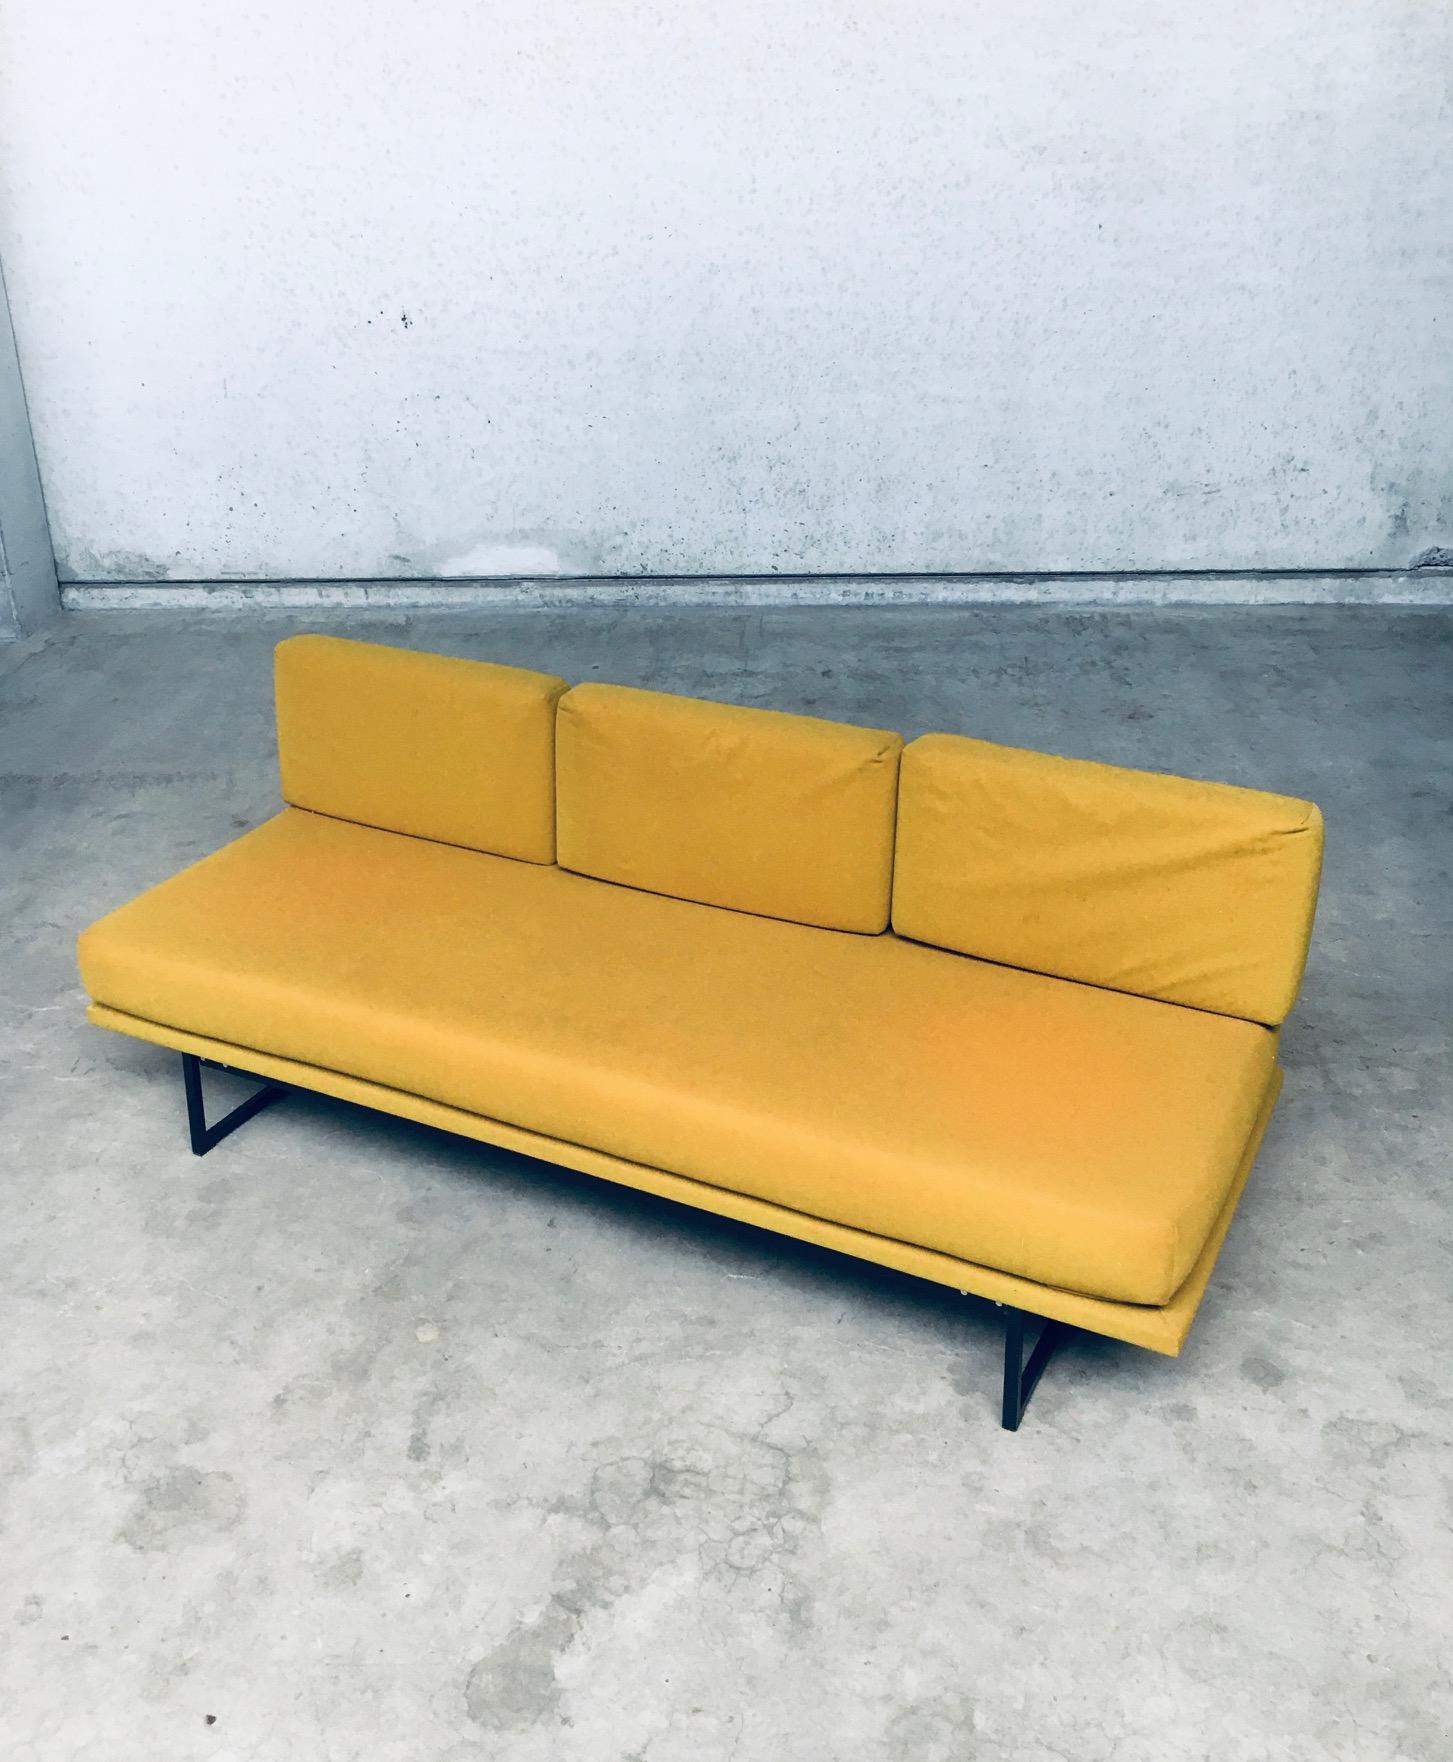 sofa bench design